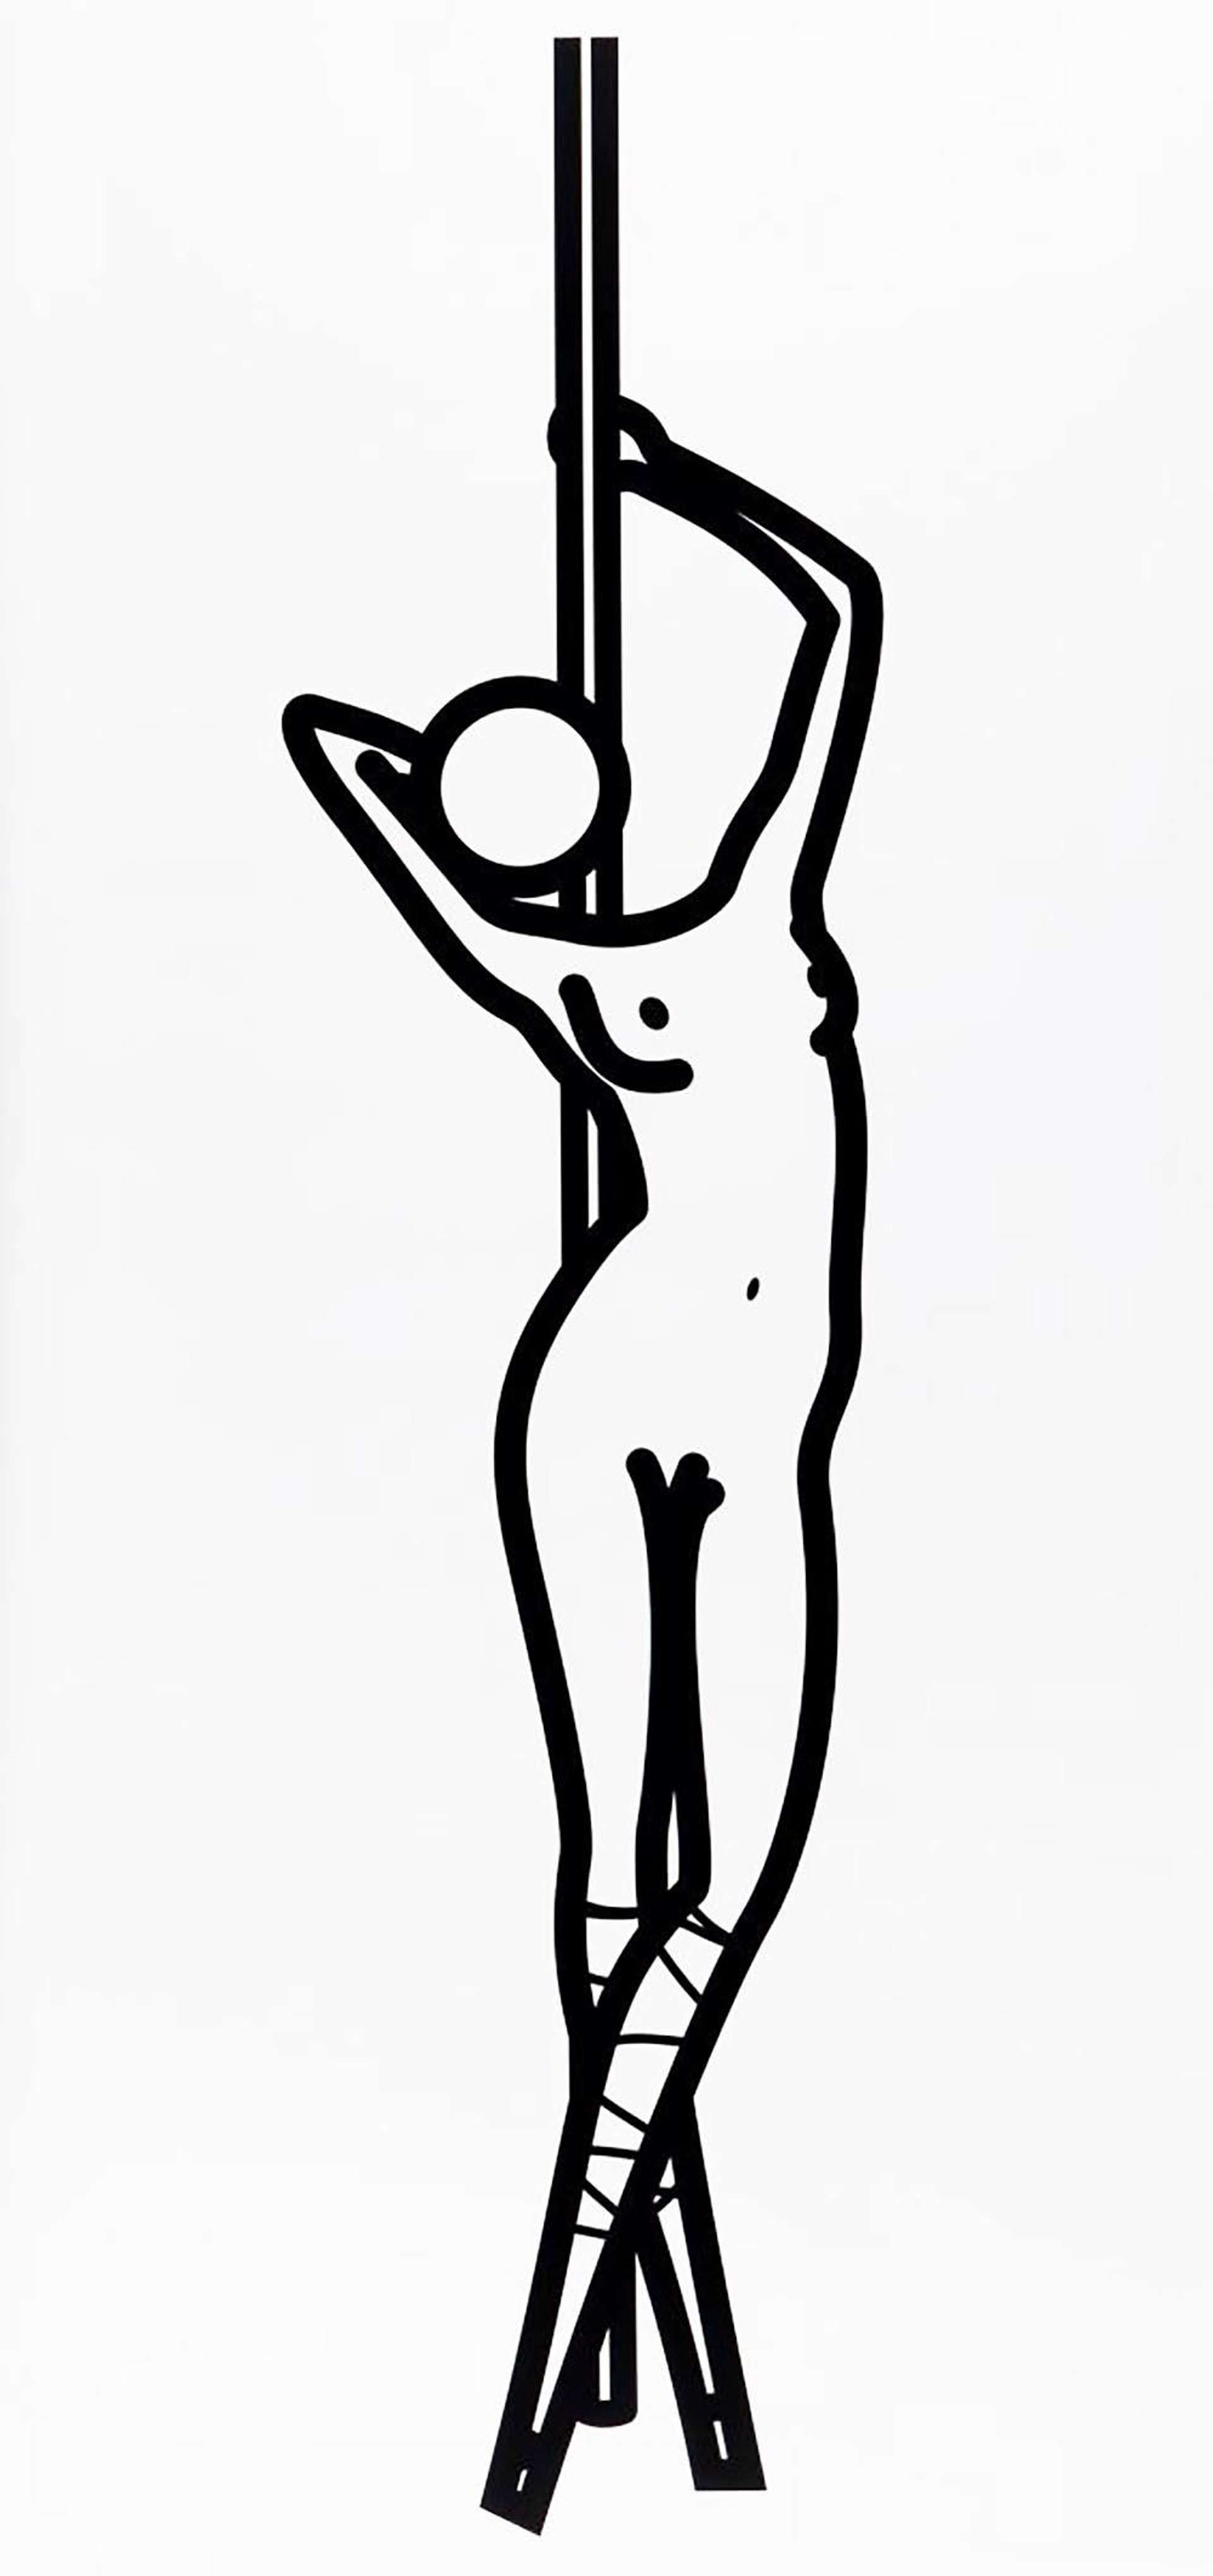 This is Shahnoza – Shahnoza Pole Dancer - Unsigned Print by Julian Opie 2007 - MyArtBroker